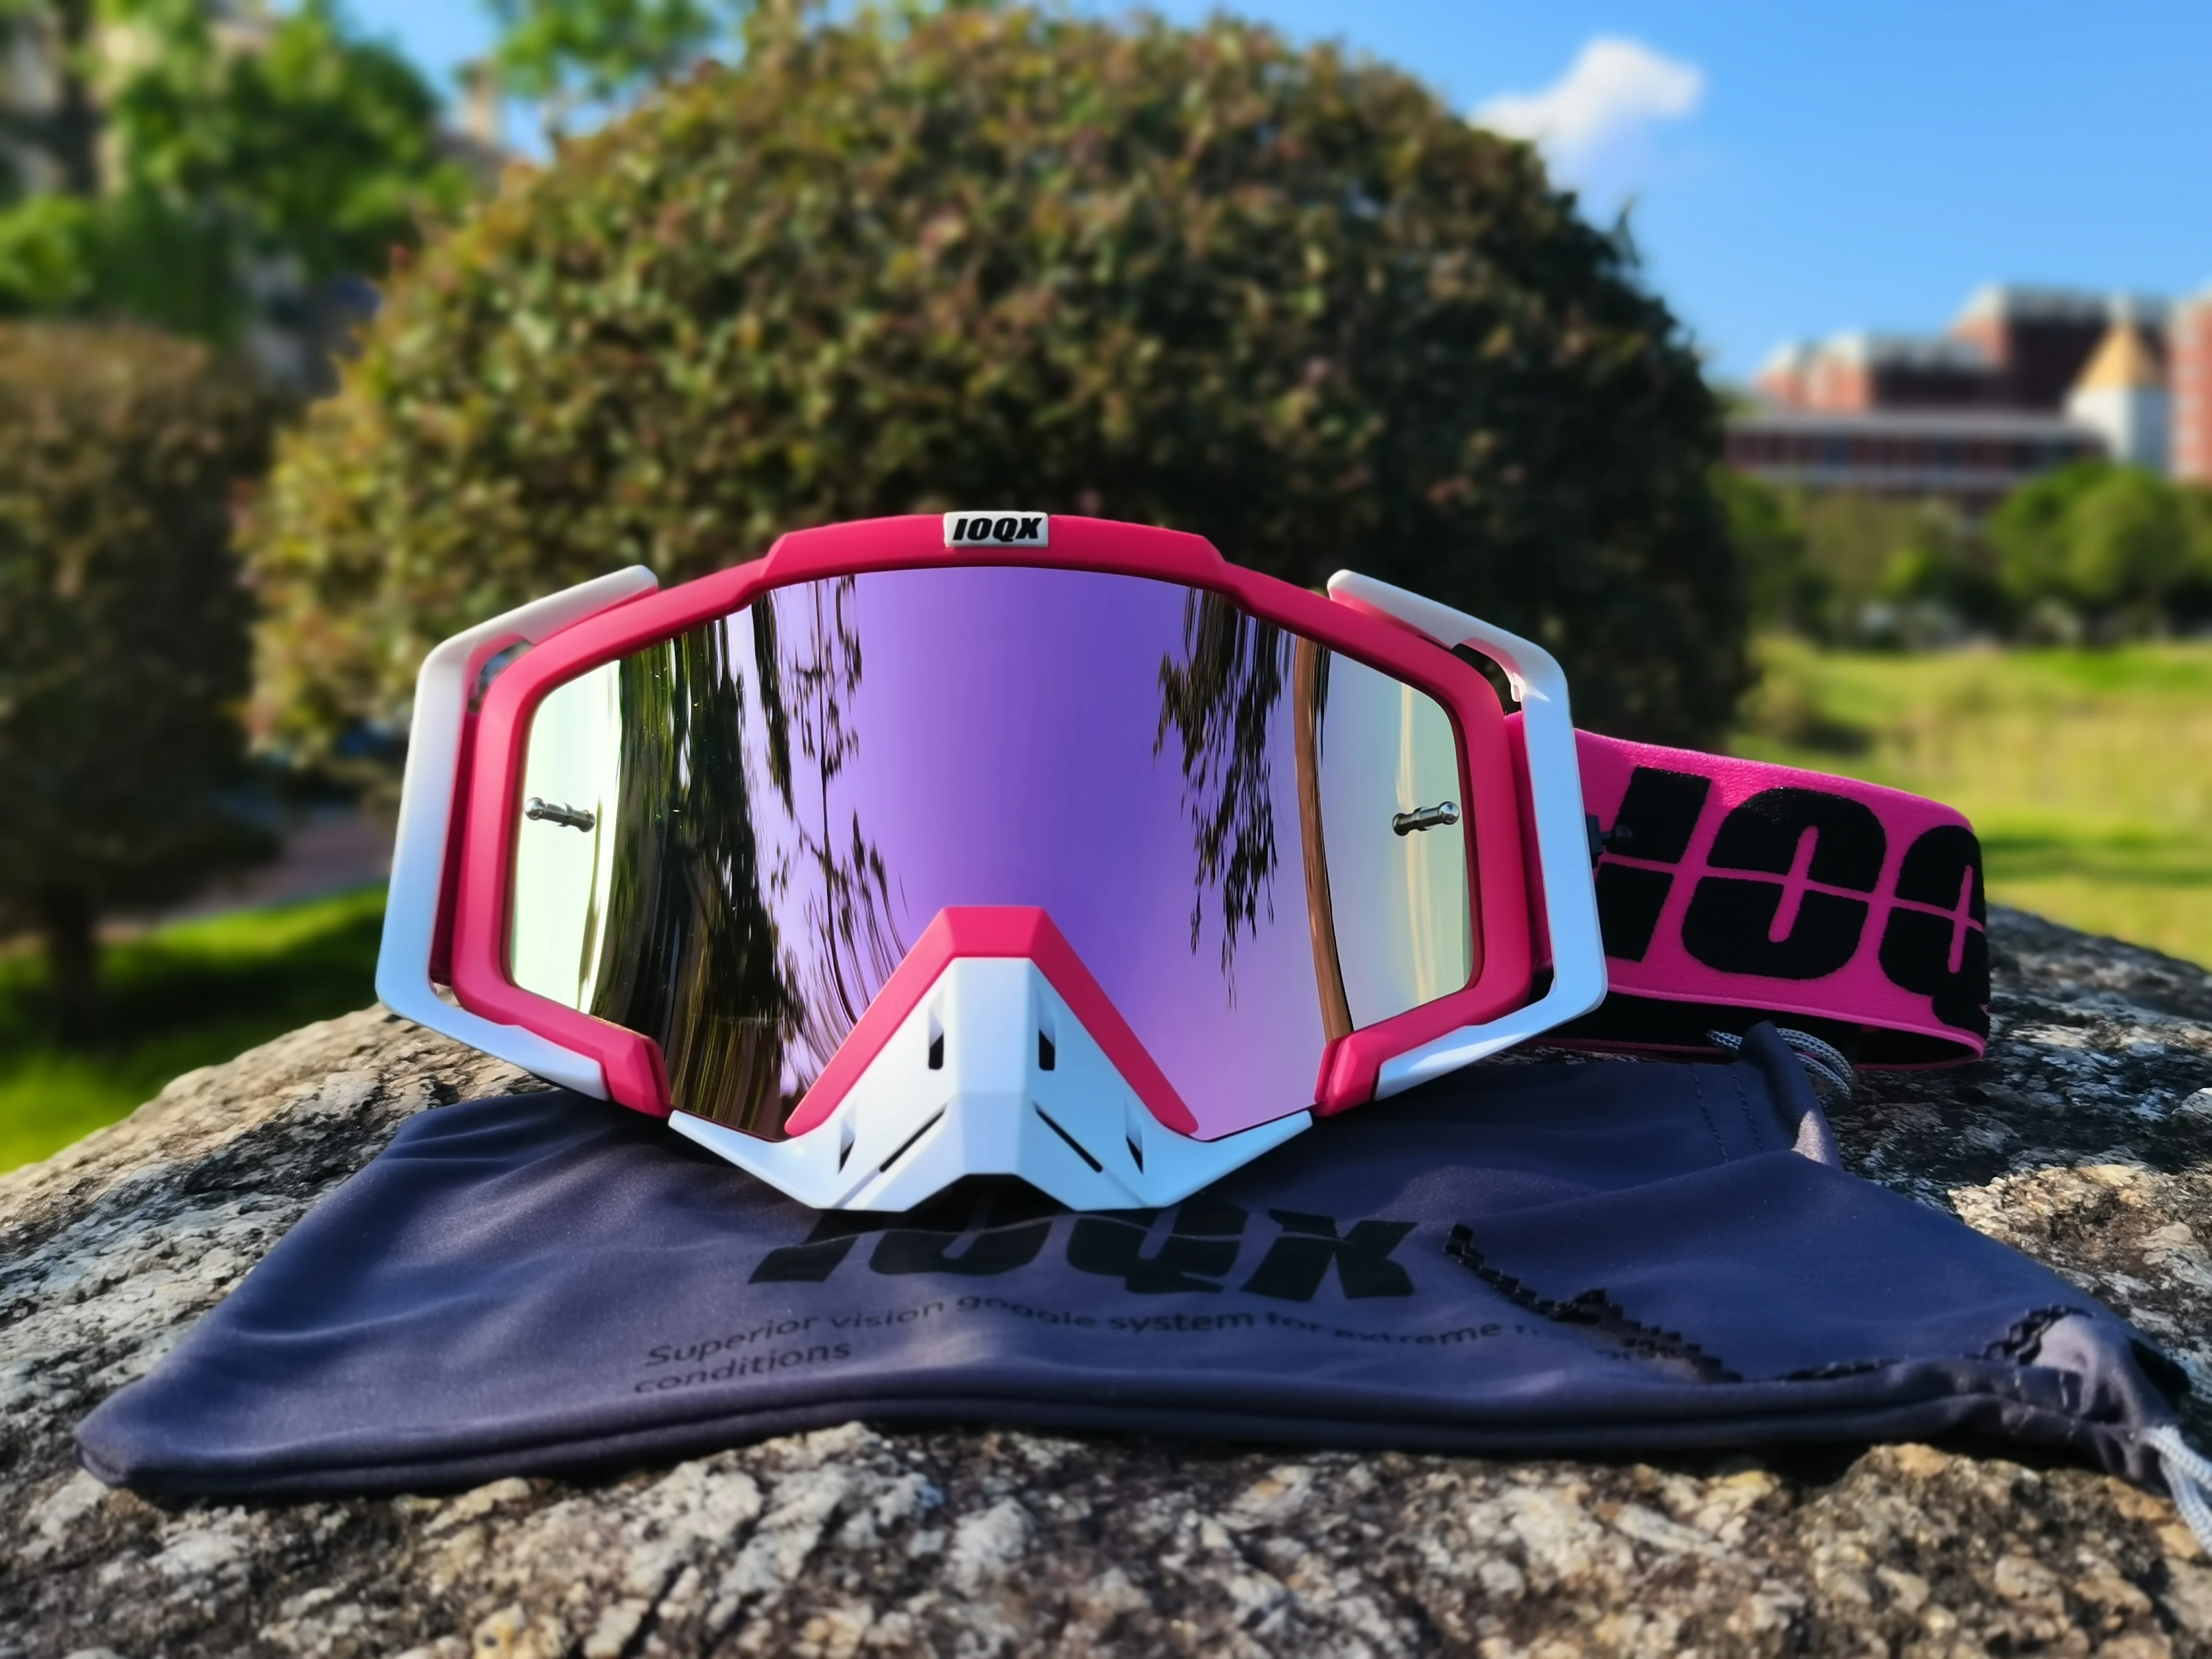 

2019 IOQX Motocross Goggles Gafas Motorcycle Helmet Cycling Glasses Atv Dirt Bike Sunglasses Safety Goggles Ski Mask goggle